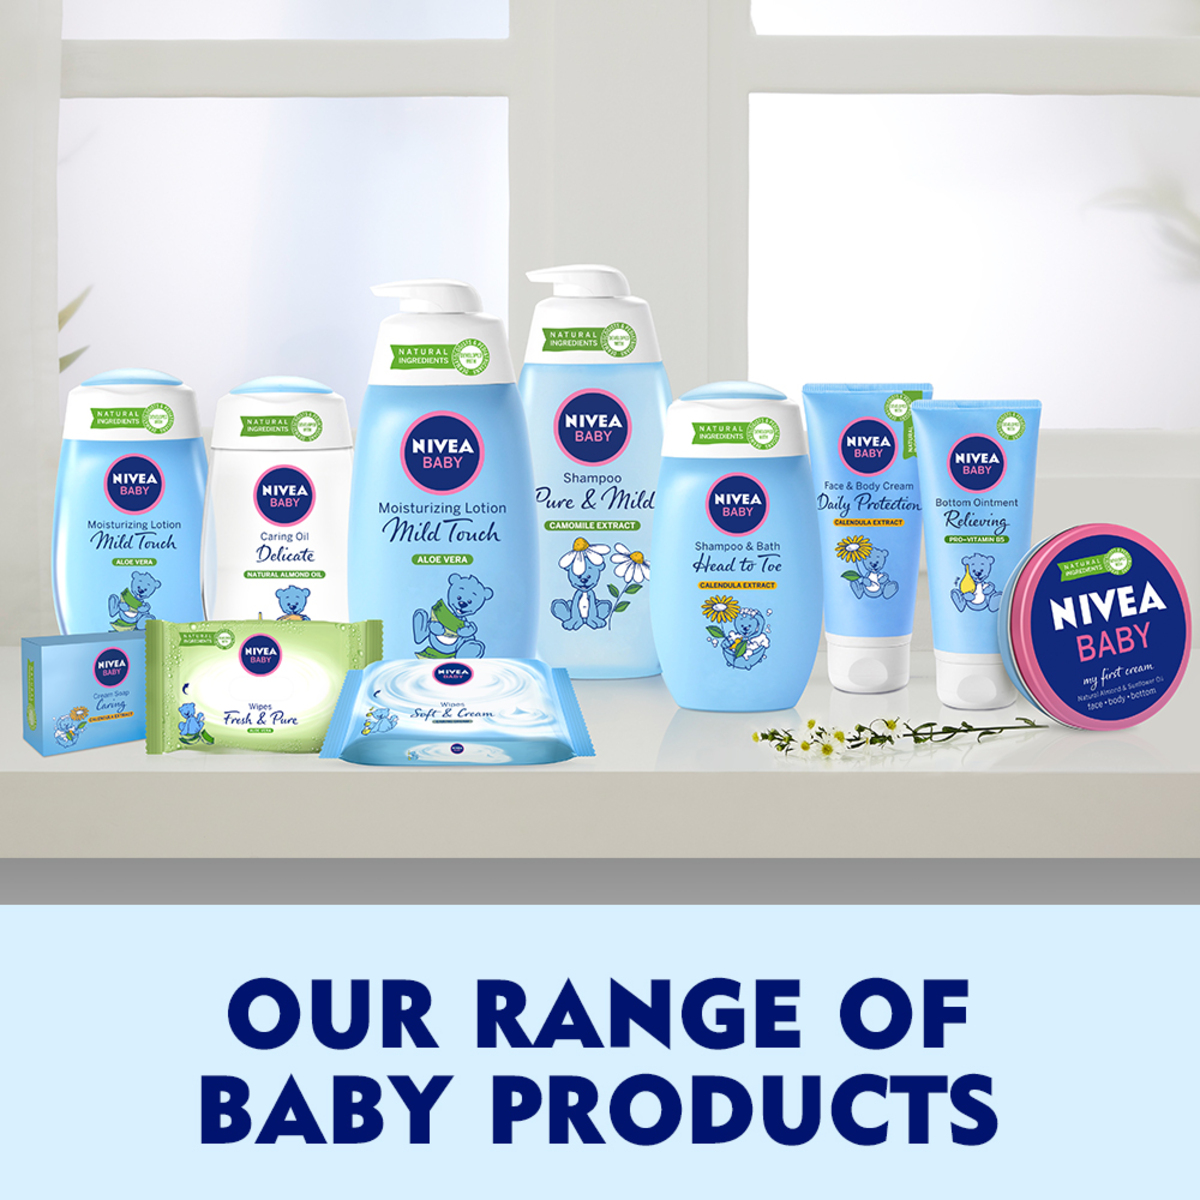 Nivea Baby Bath Shampoo Head To Toe Calendula Extract 500 ml